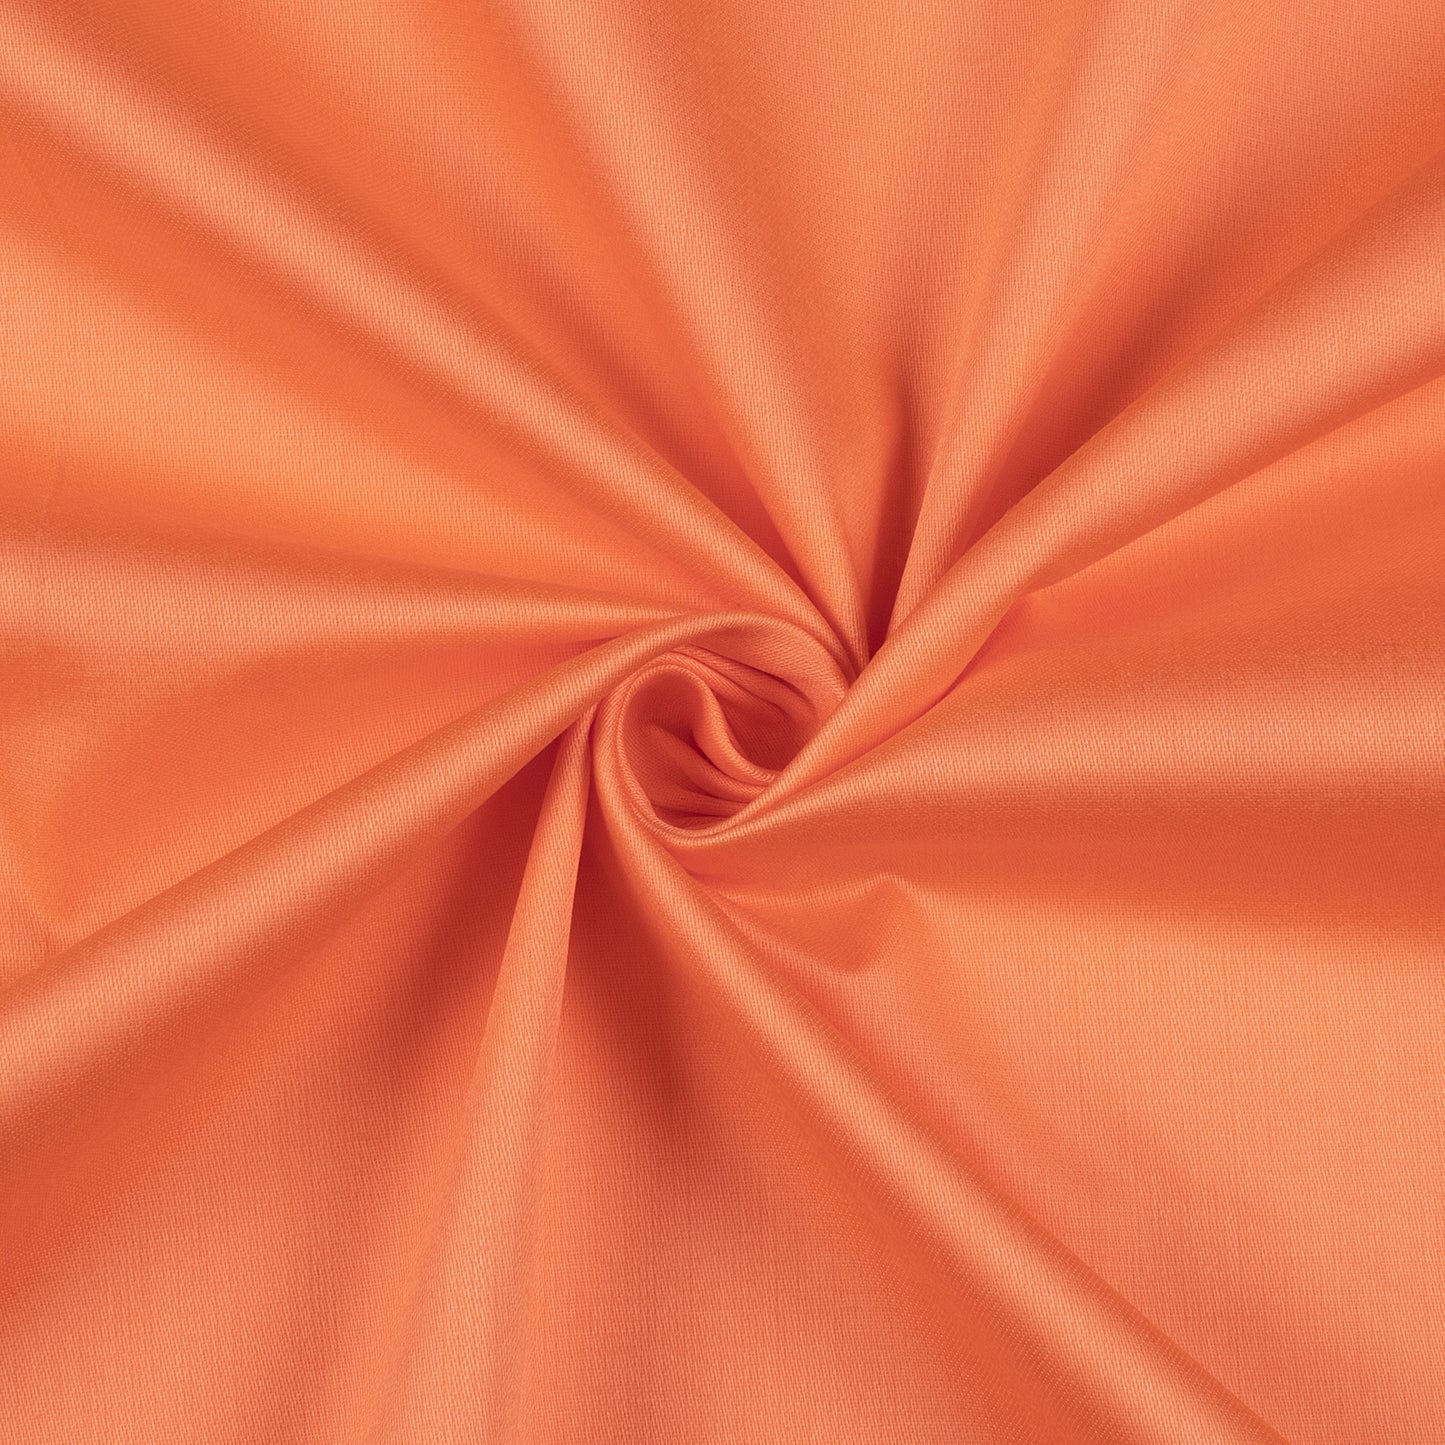 Coral Orange Plain Glazed Cotton Fabric